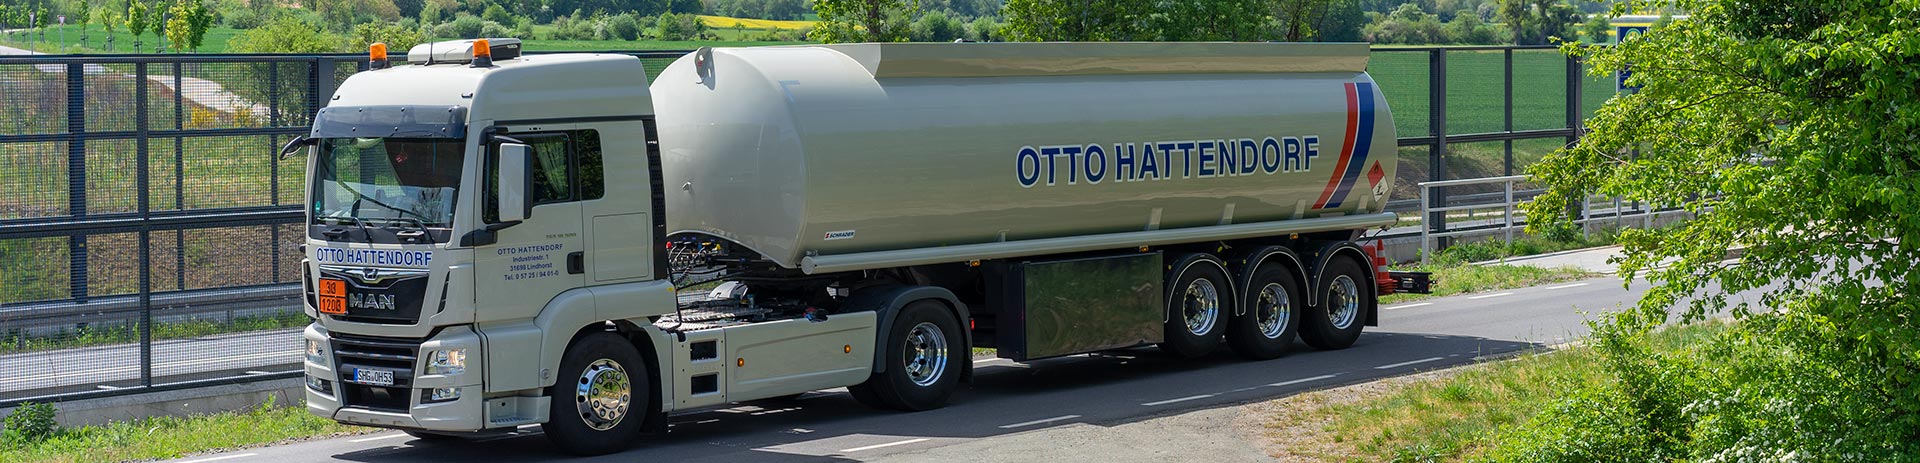 Tanklastzug Otto Hattendorf